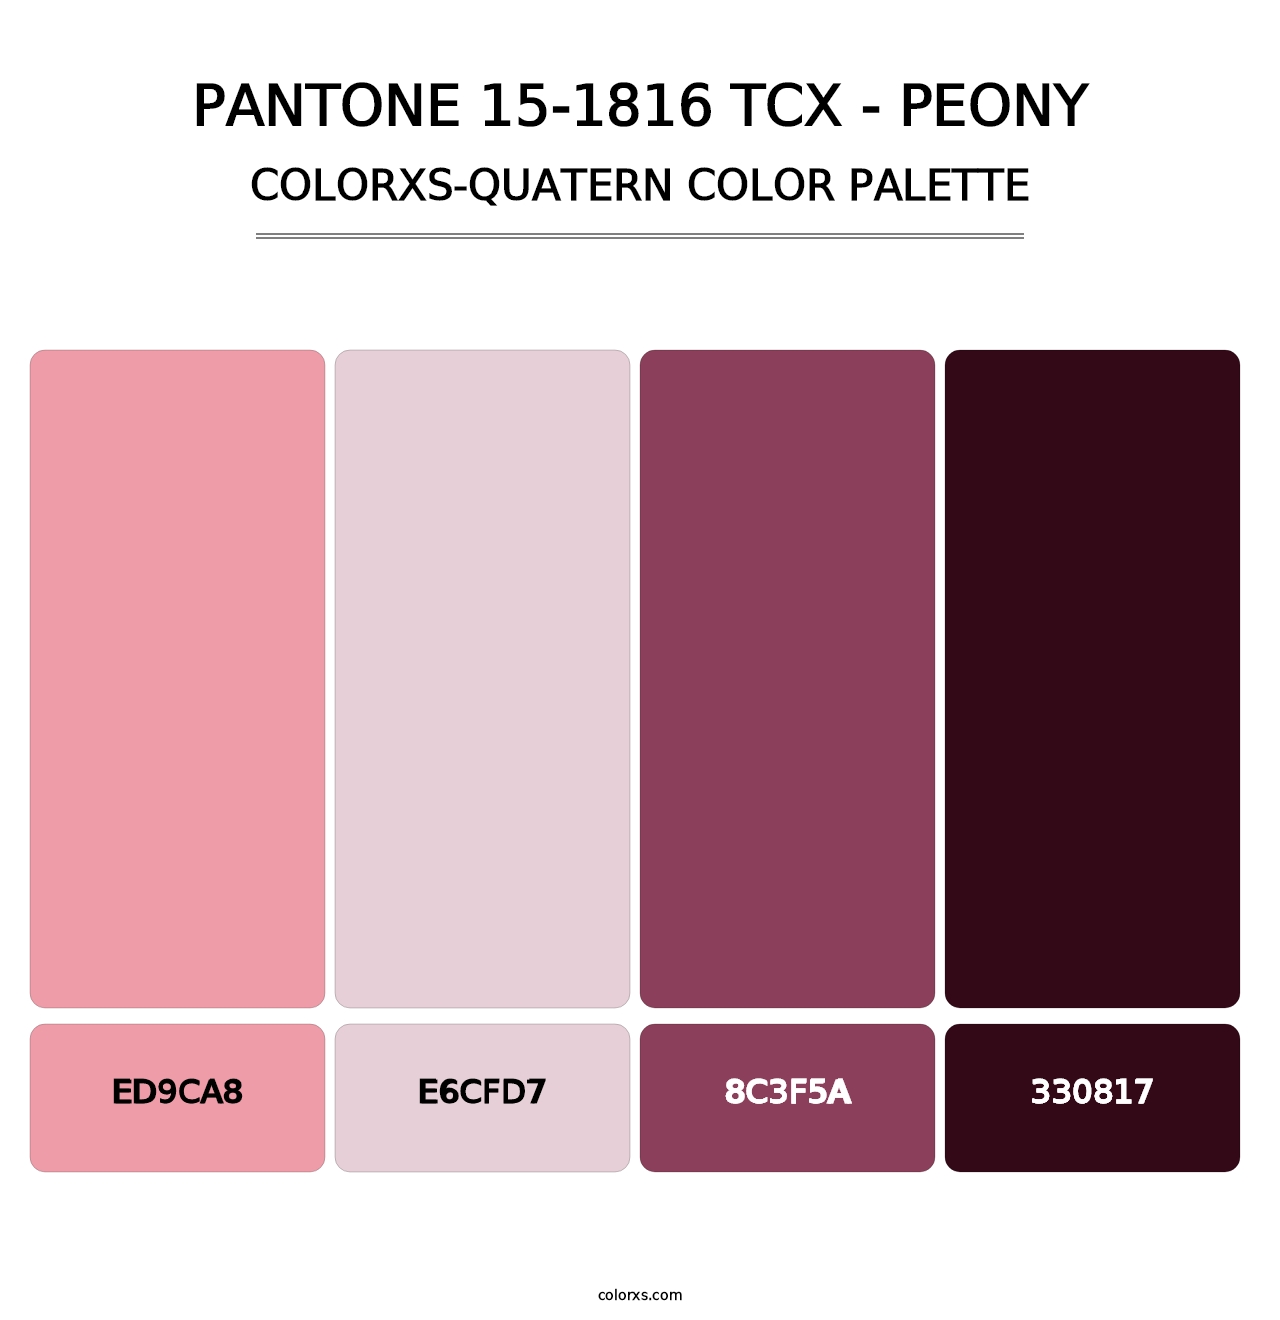 PANTONE 15-1816 TCX - Peony - Colorxs Quatern Palette